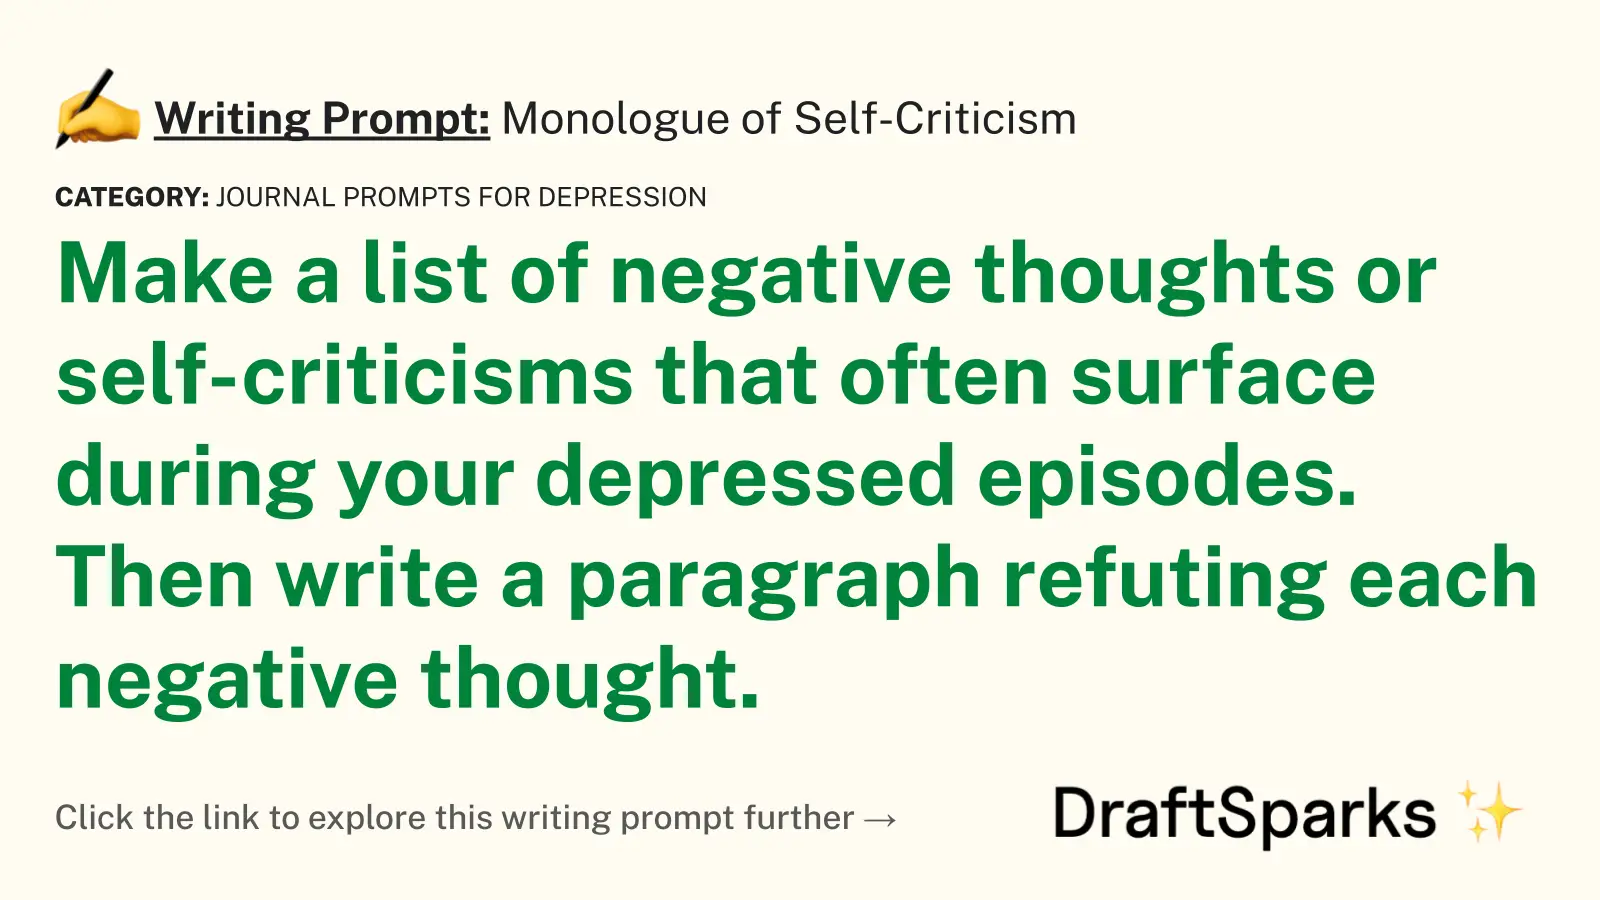 Monologue of Self-Criticism